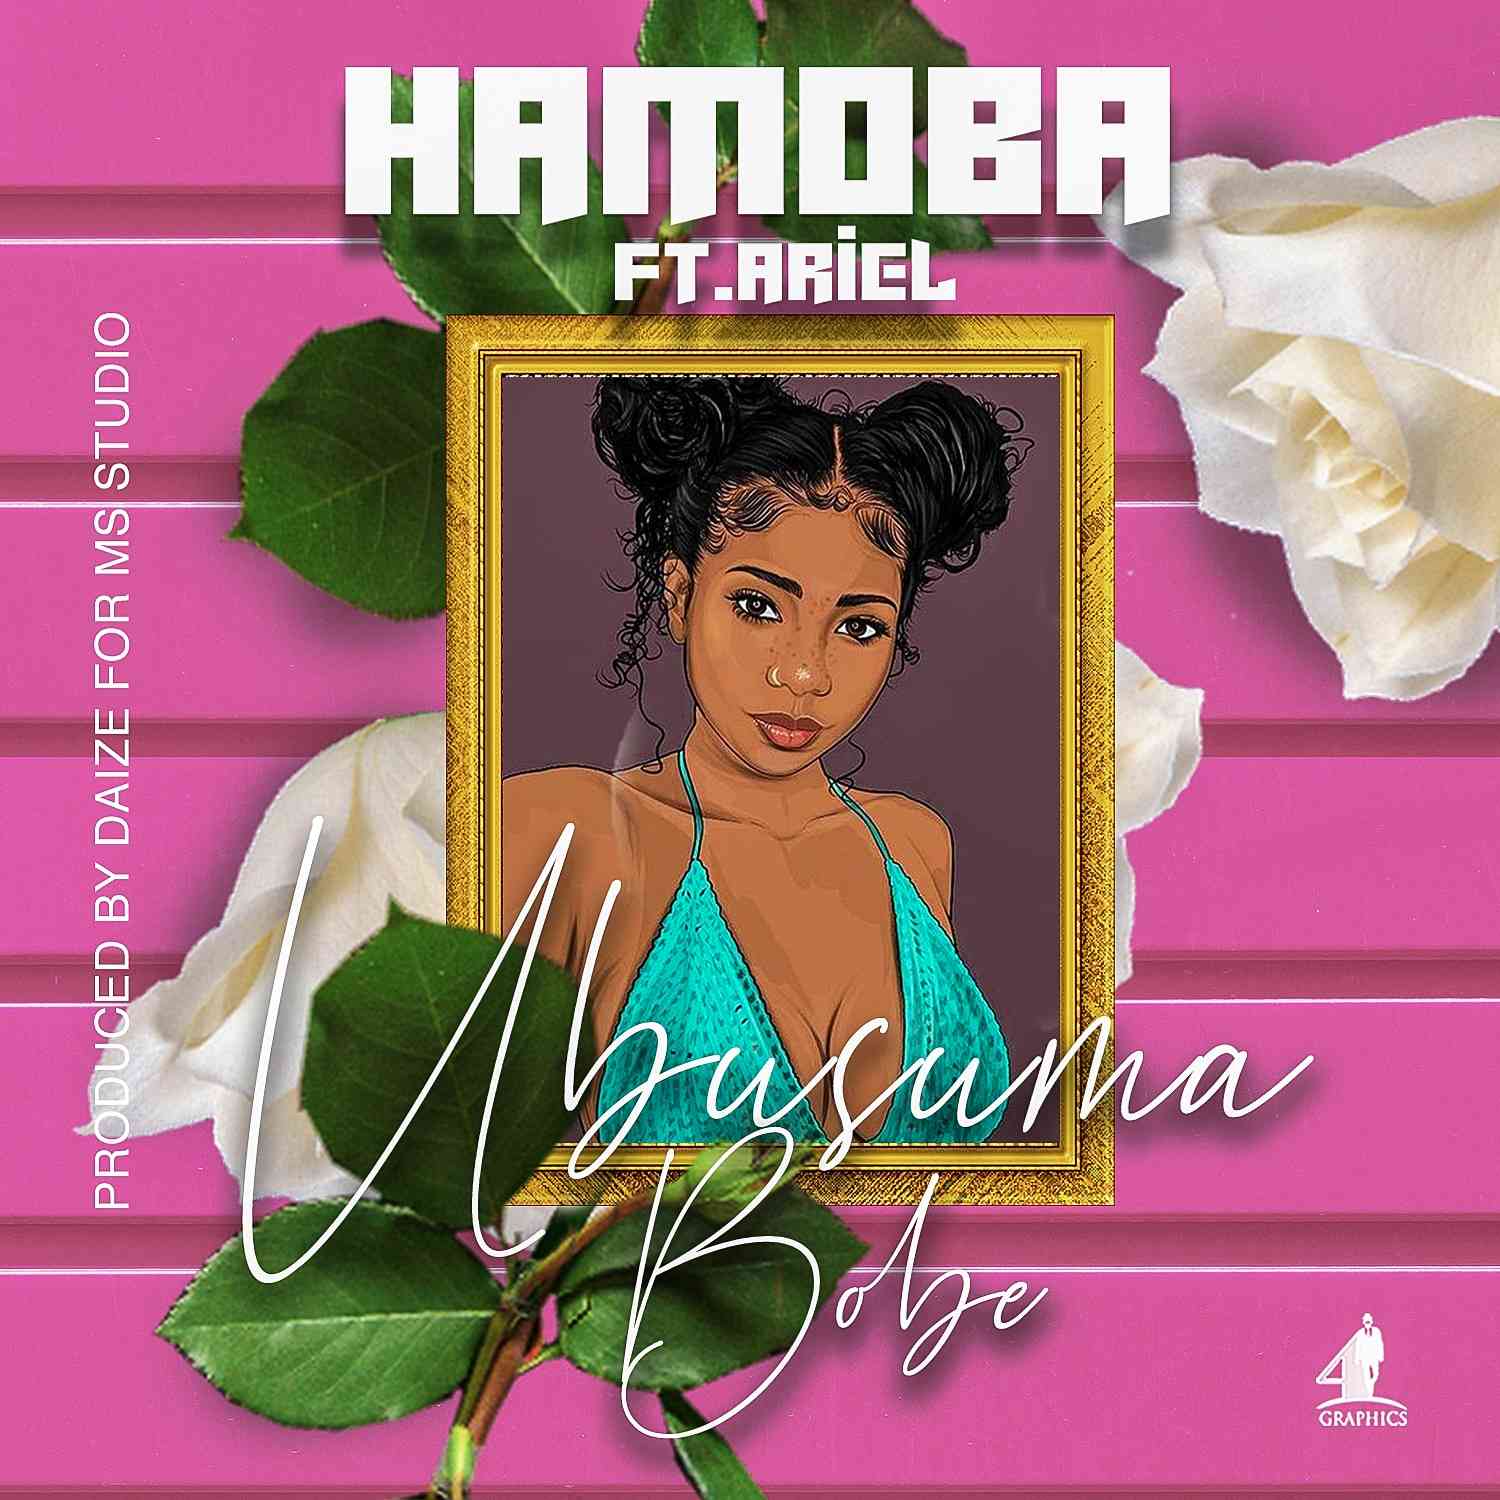 Hamoba Feat Ariel - Ubusuma bobe